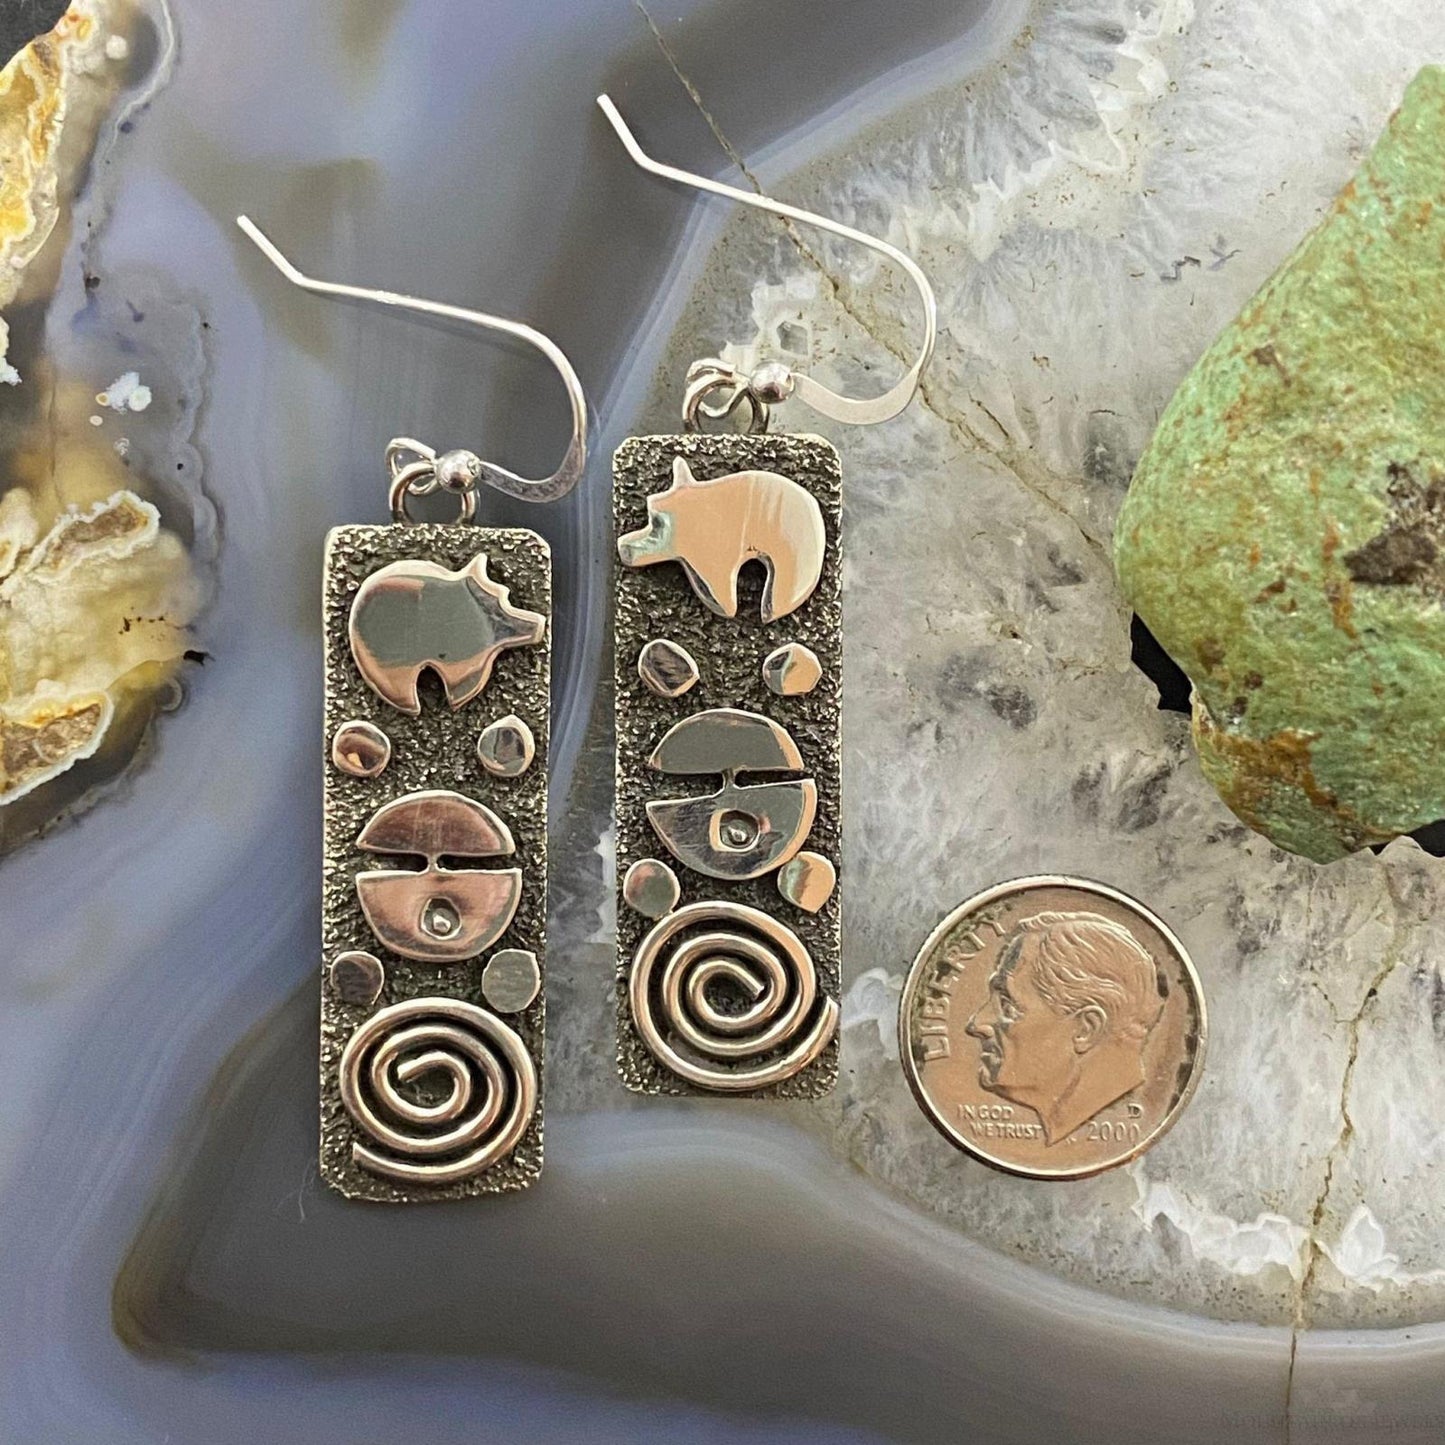 Alex Sanchez Native American Sterling Silver Rectangle Petroglyph Dangle Earrings For Women #5